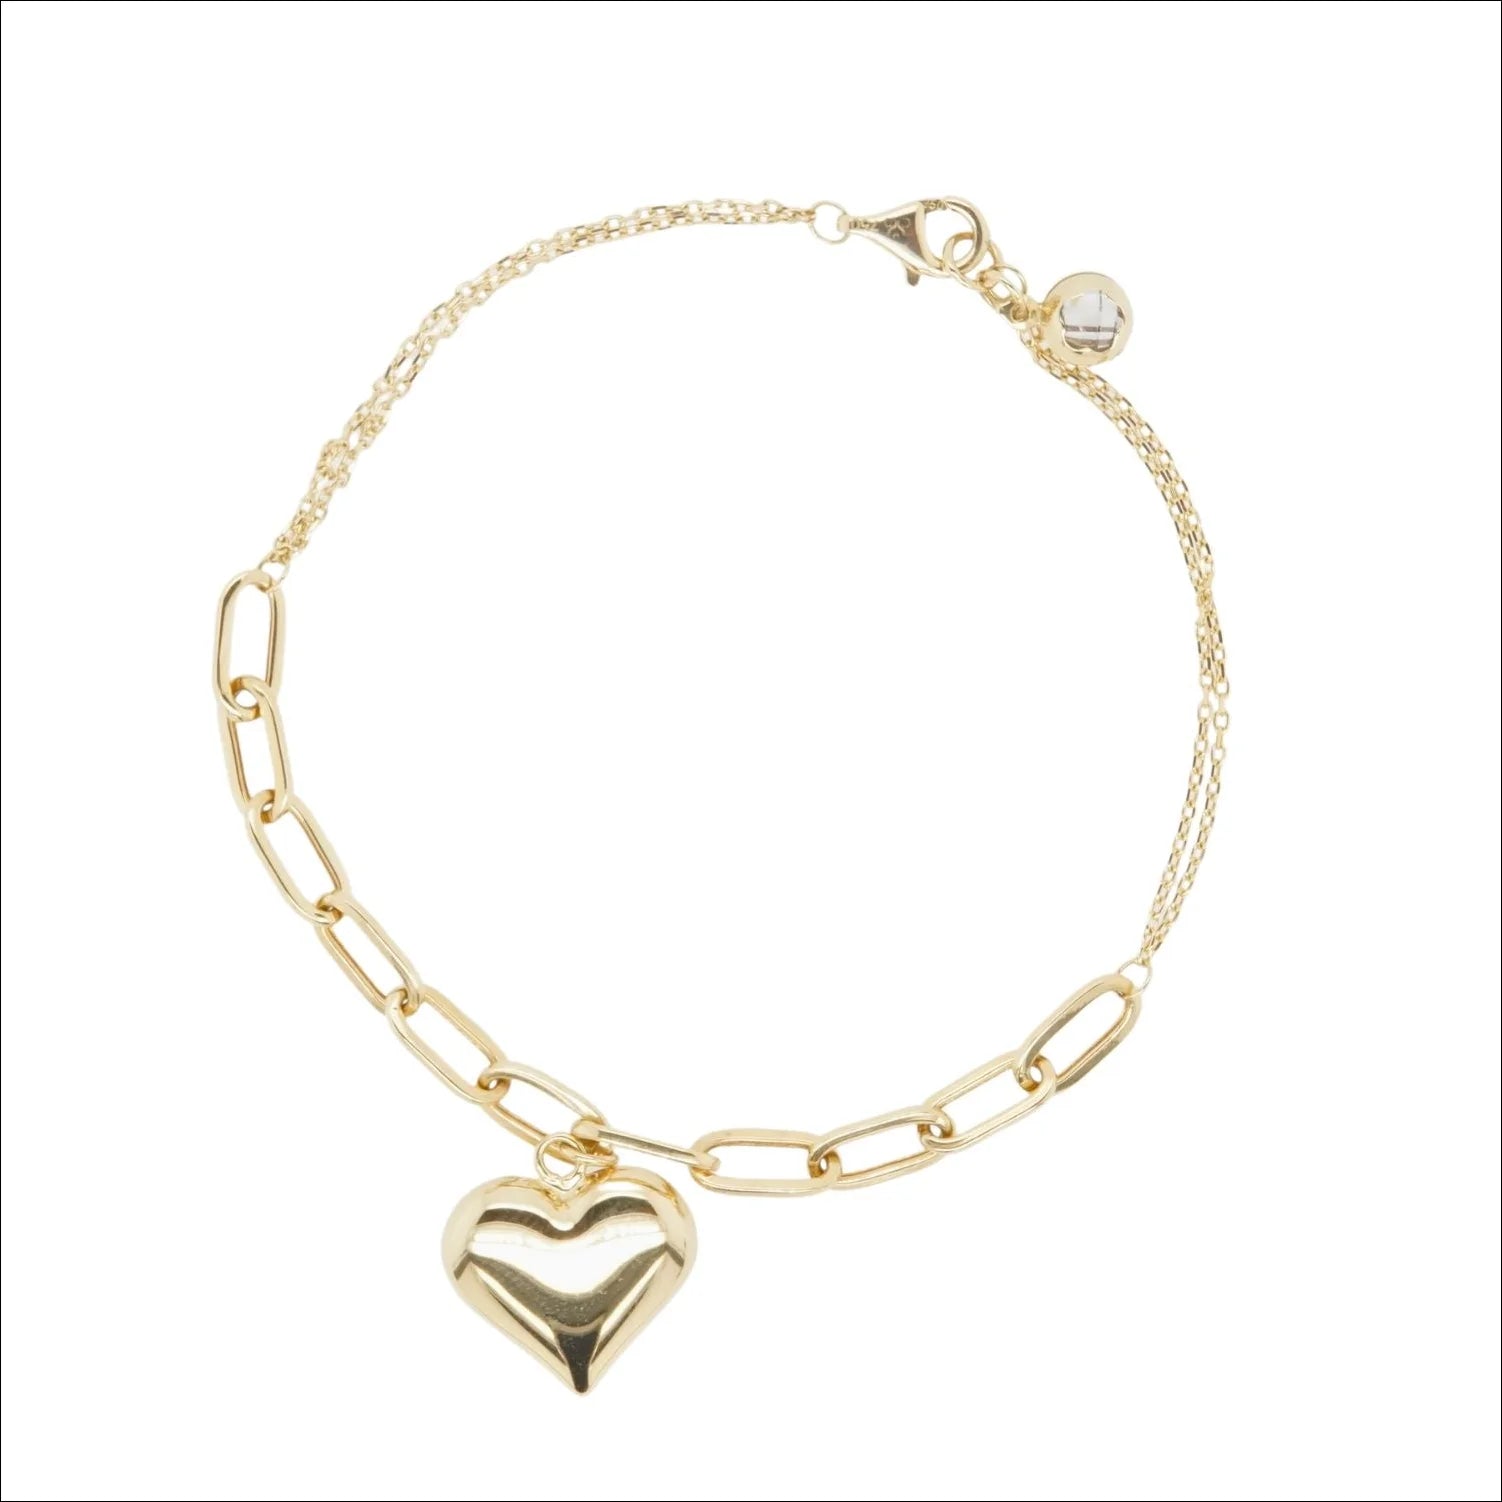 Art Gold Jewelry’s Heart Bracelet: A Symbol of Love